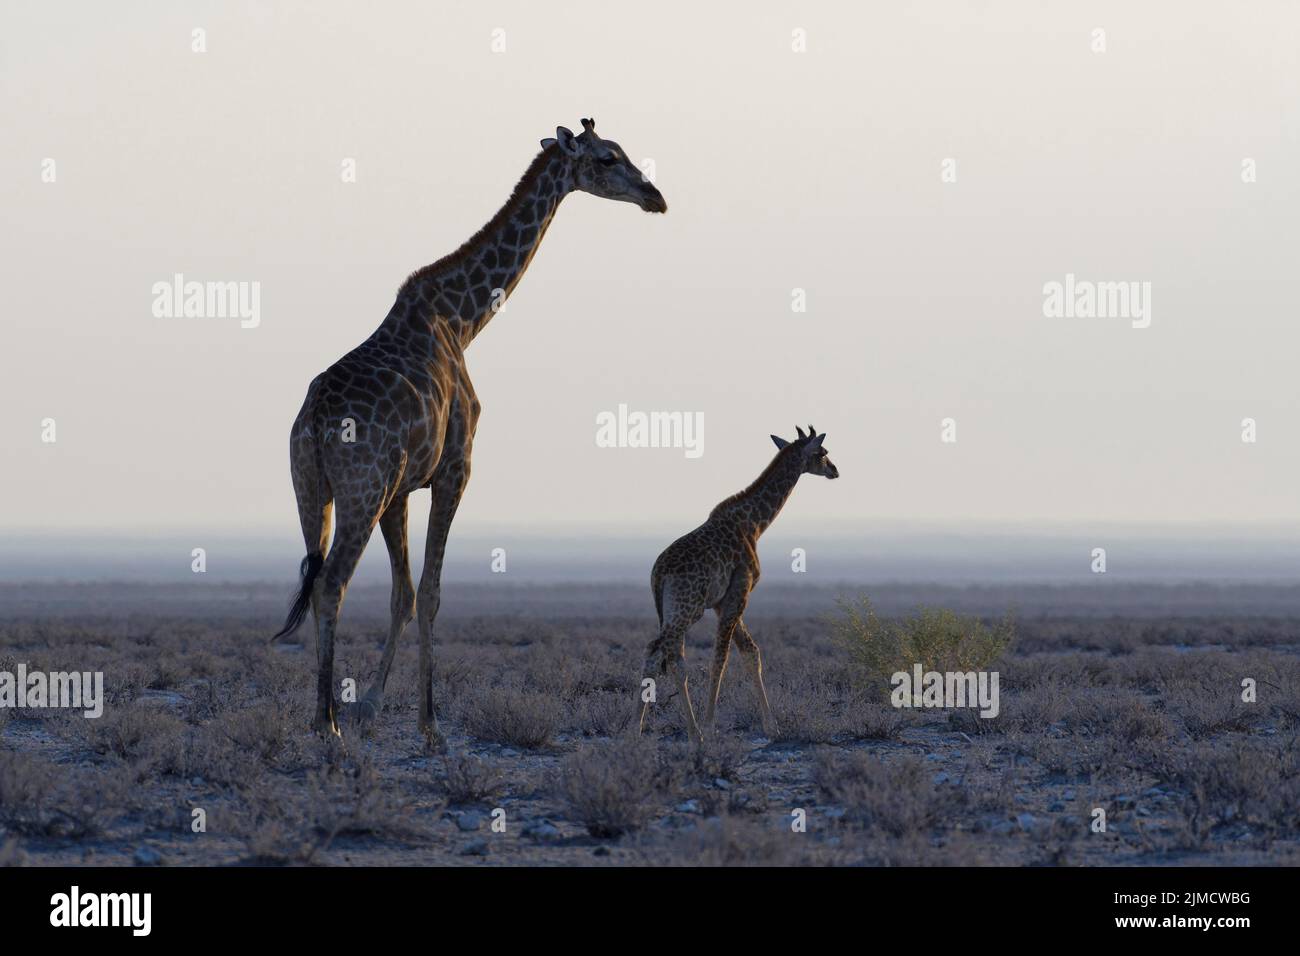 Jirafas angoleñas (Giraffa camelopardalis angolensis), adultos con jóvenes, caminando en pastizales secos, luz de la mañana, Parque Nacional Etosha, Namibia, África Foto de stock